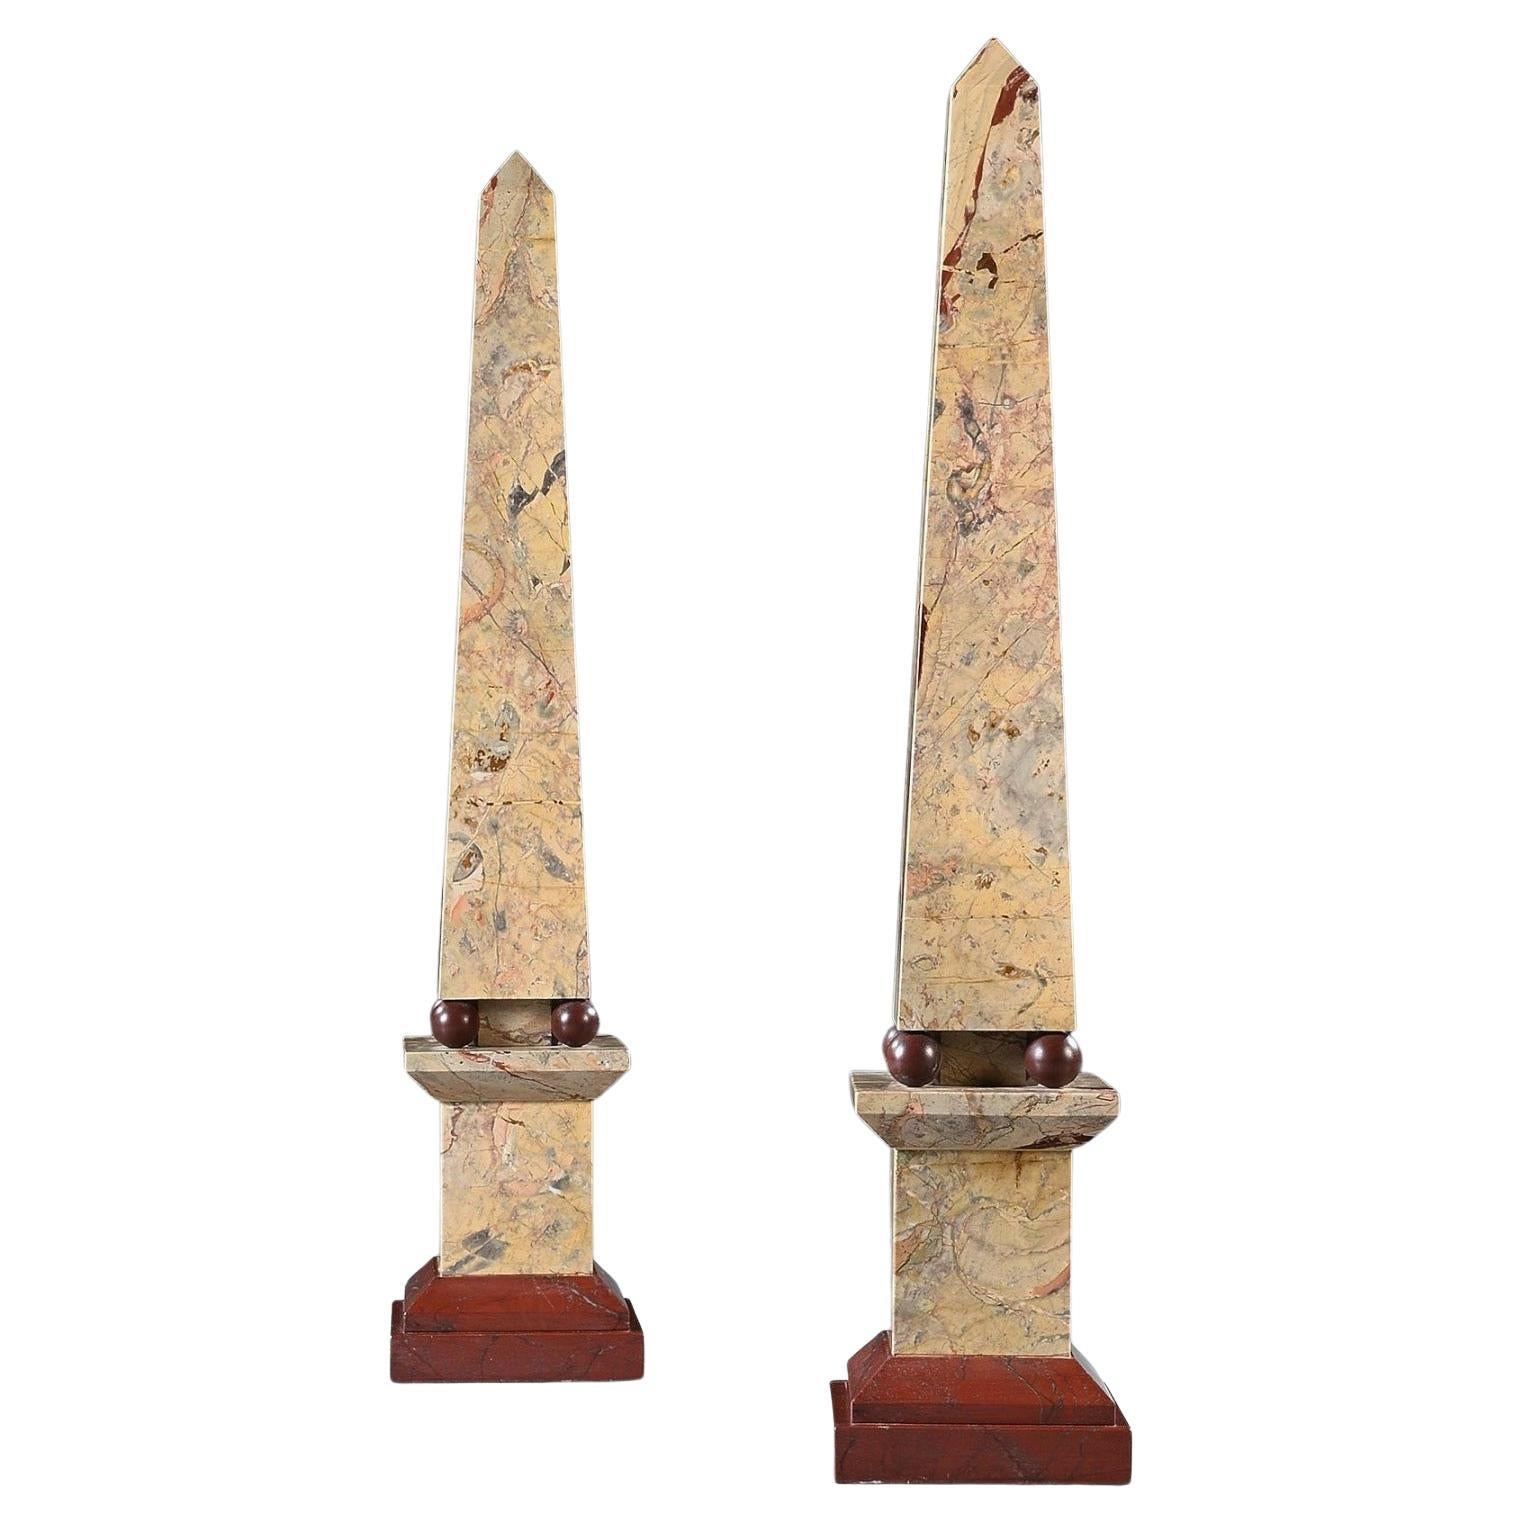 Pair Of Portasanta And Rosso Antico Marble Obelisks, Italian Early 20th Century